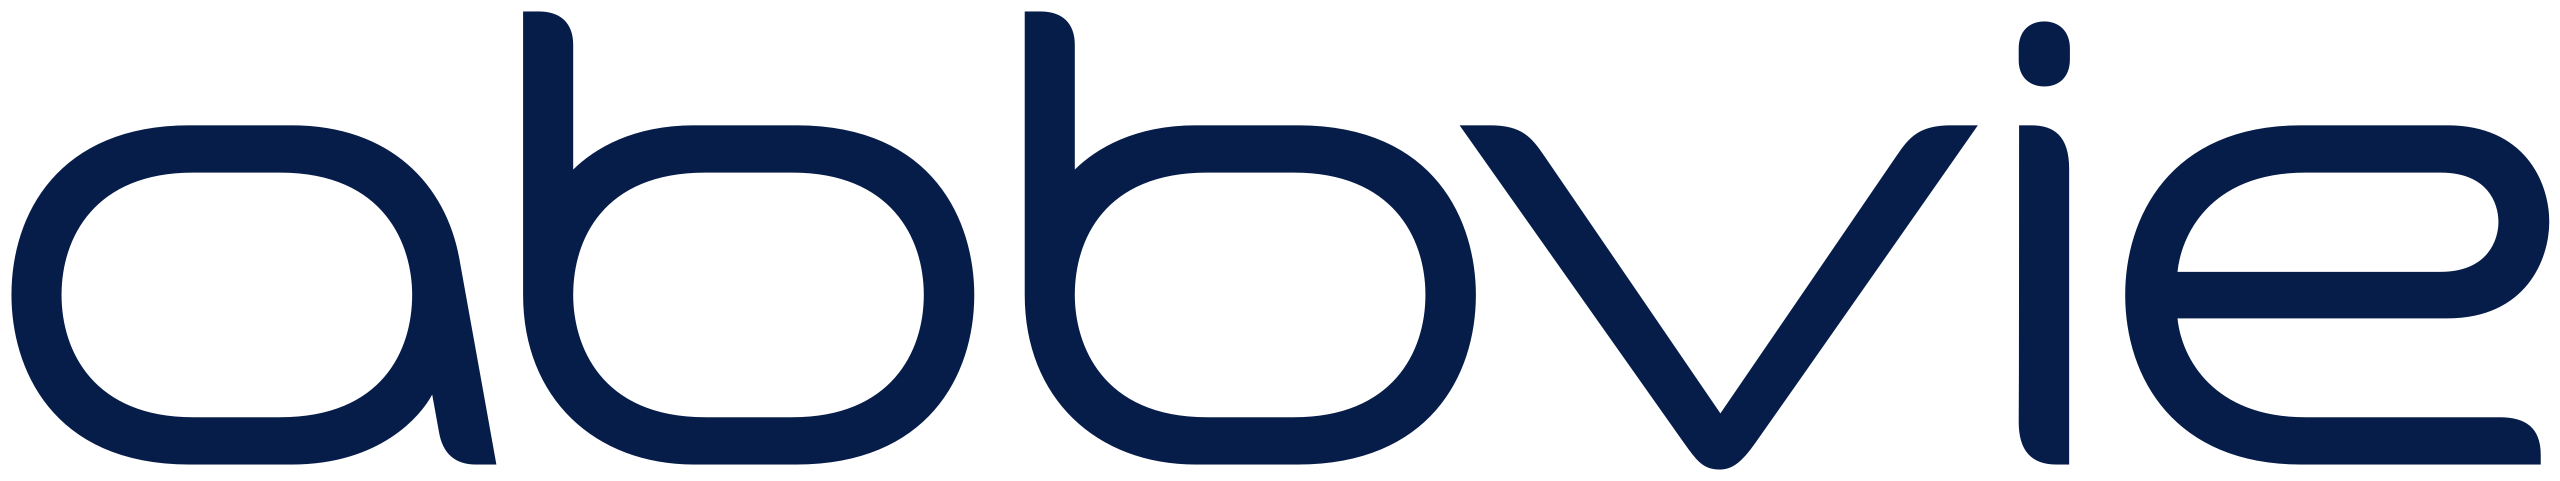 Abbvie logo image